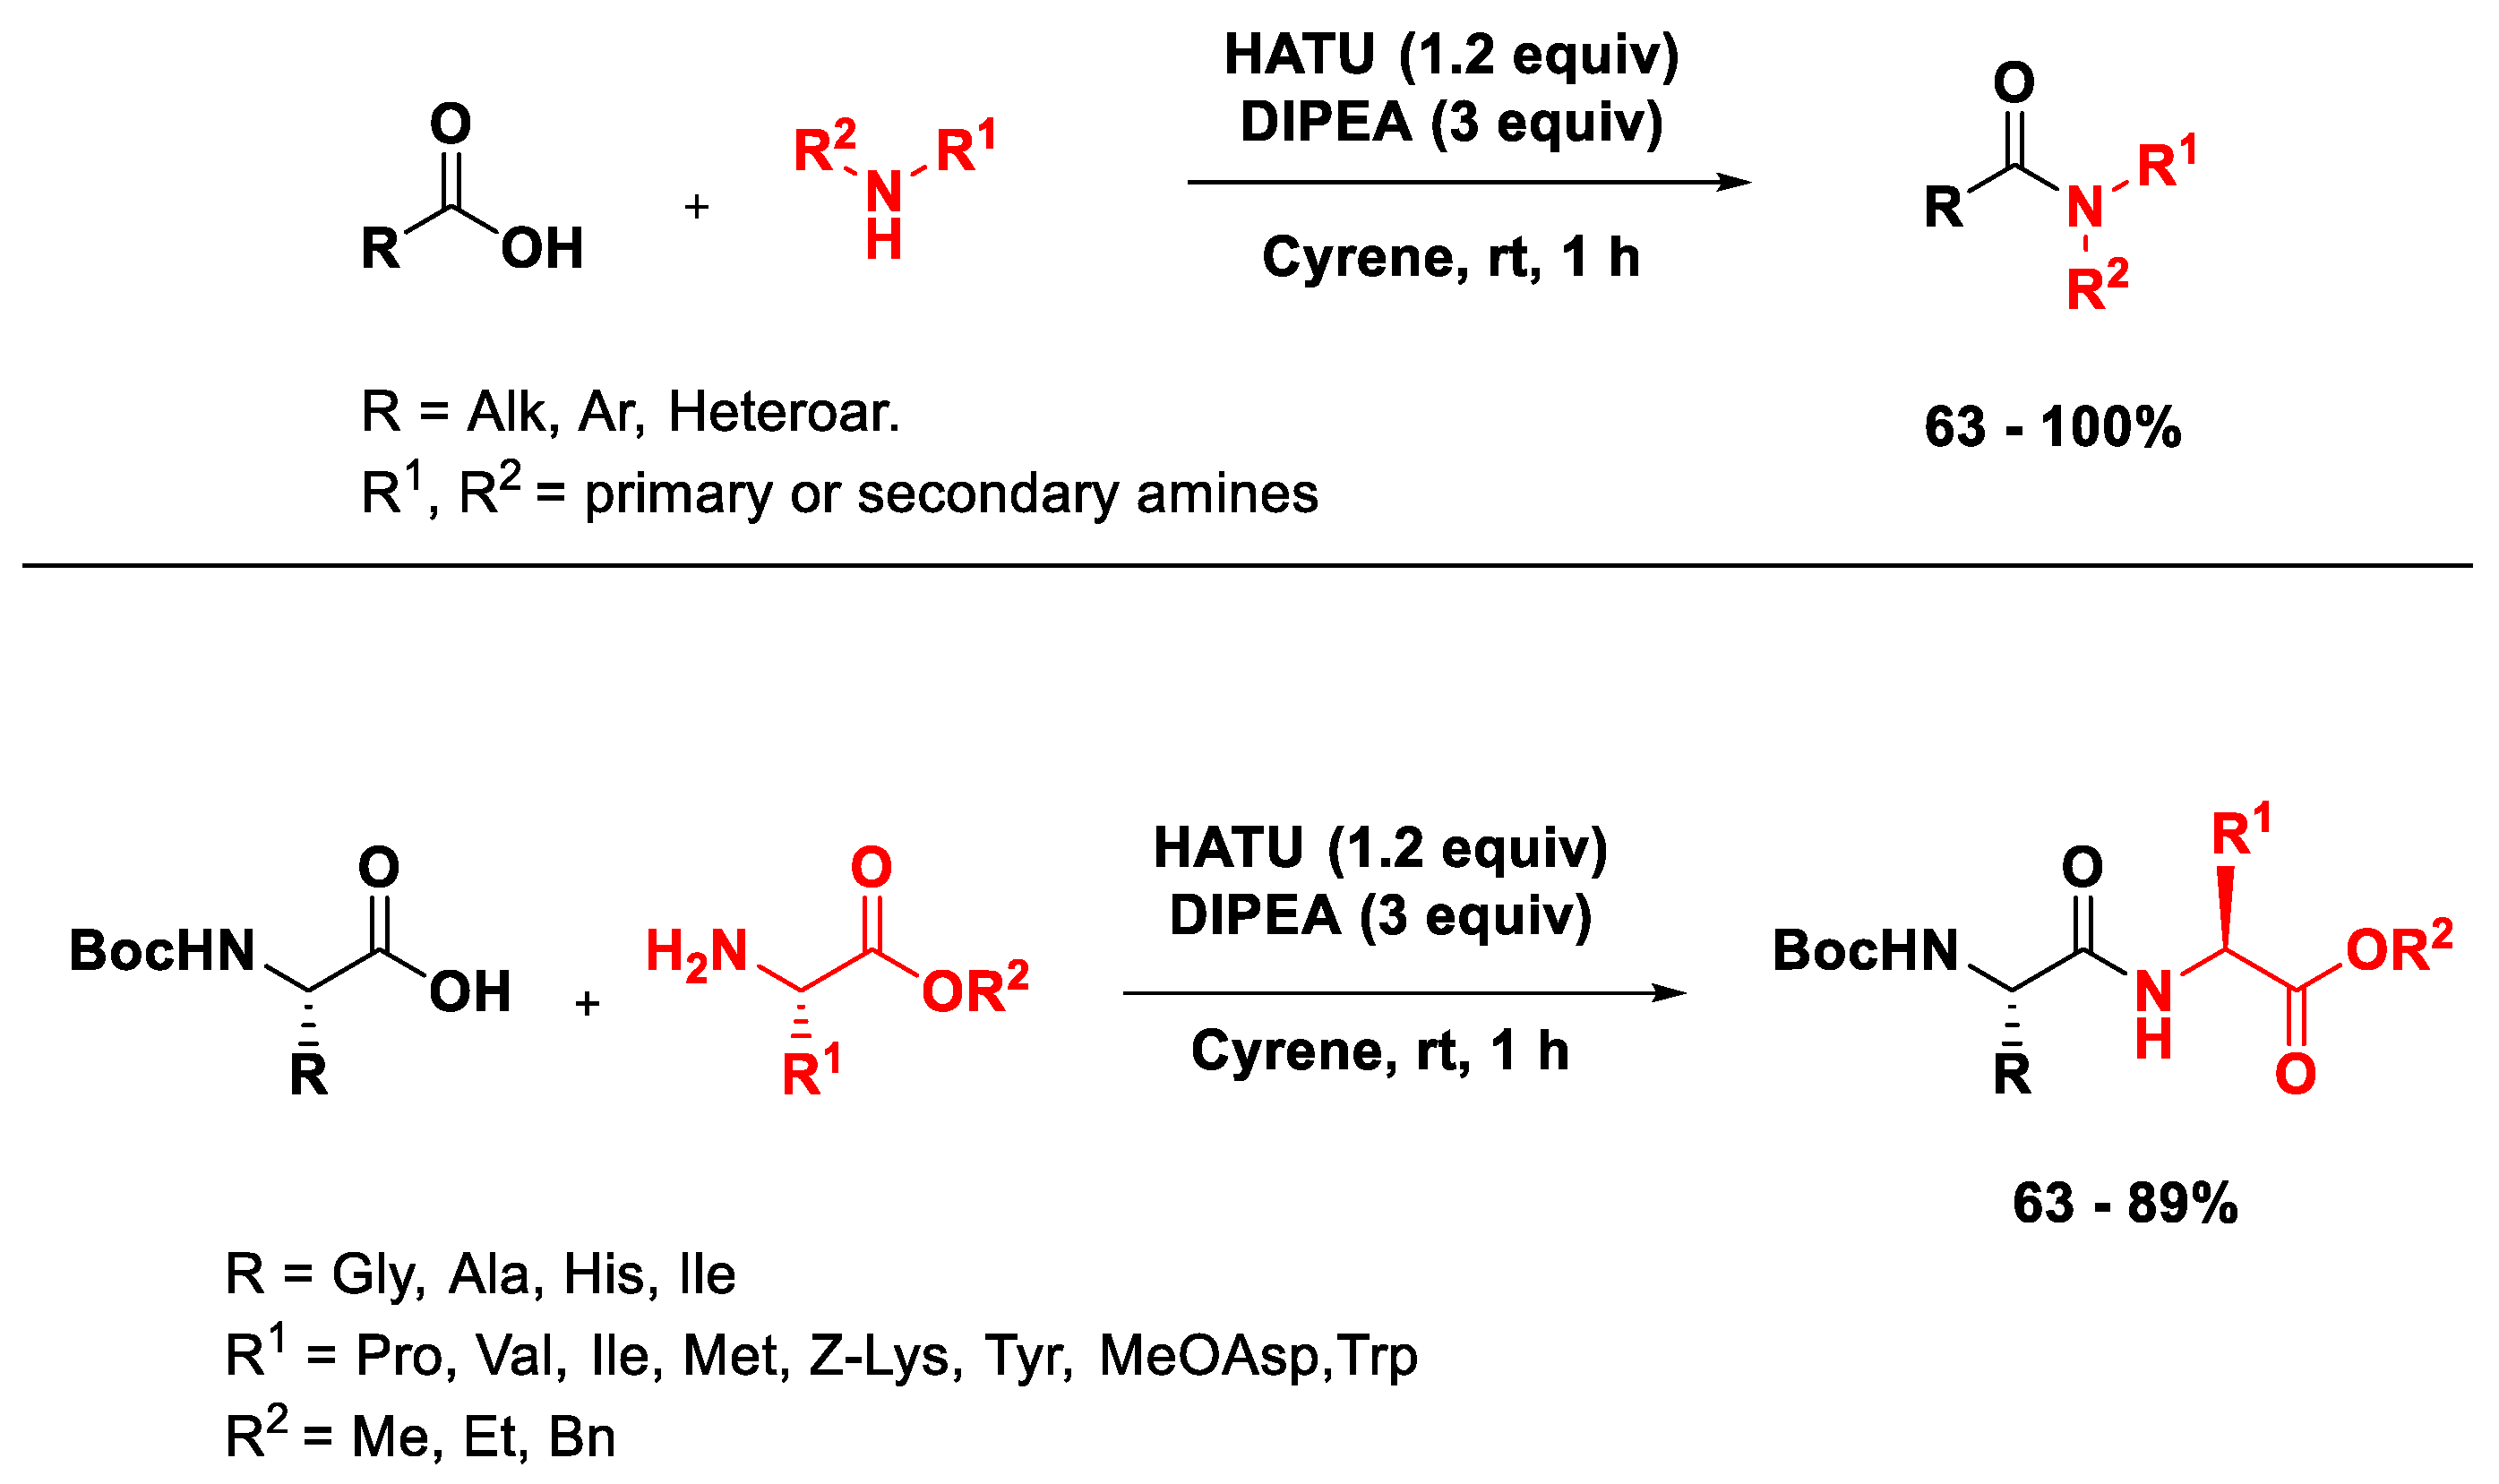 Dihydrolevoglucosenone (Cyrene) As a Green Alternative to N,N